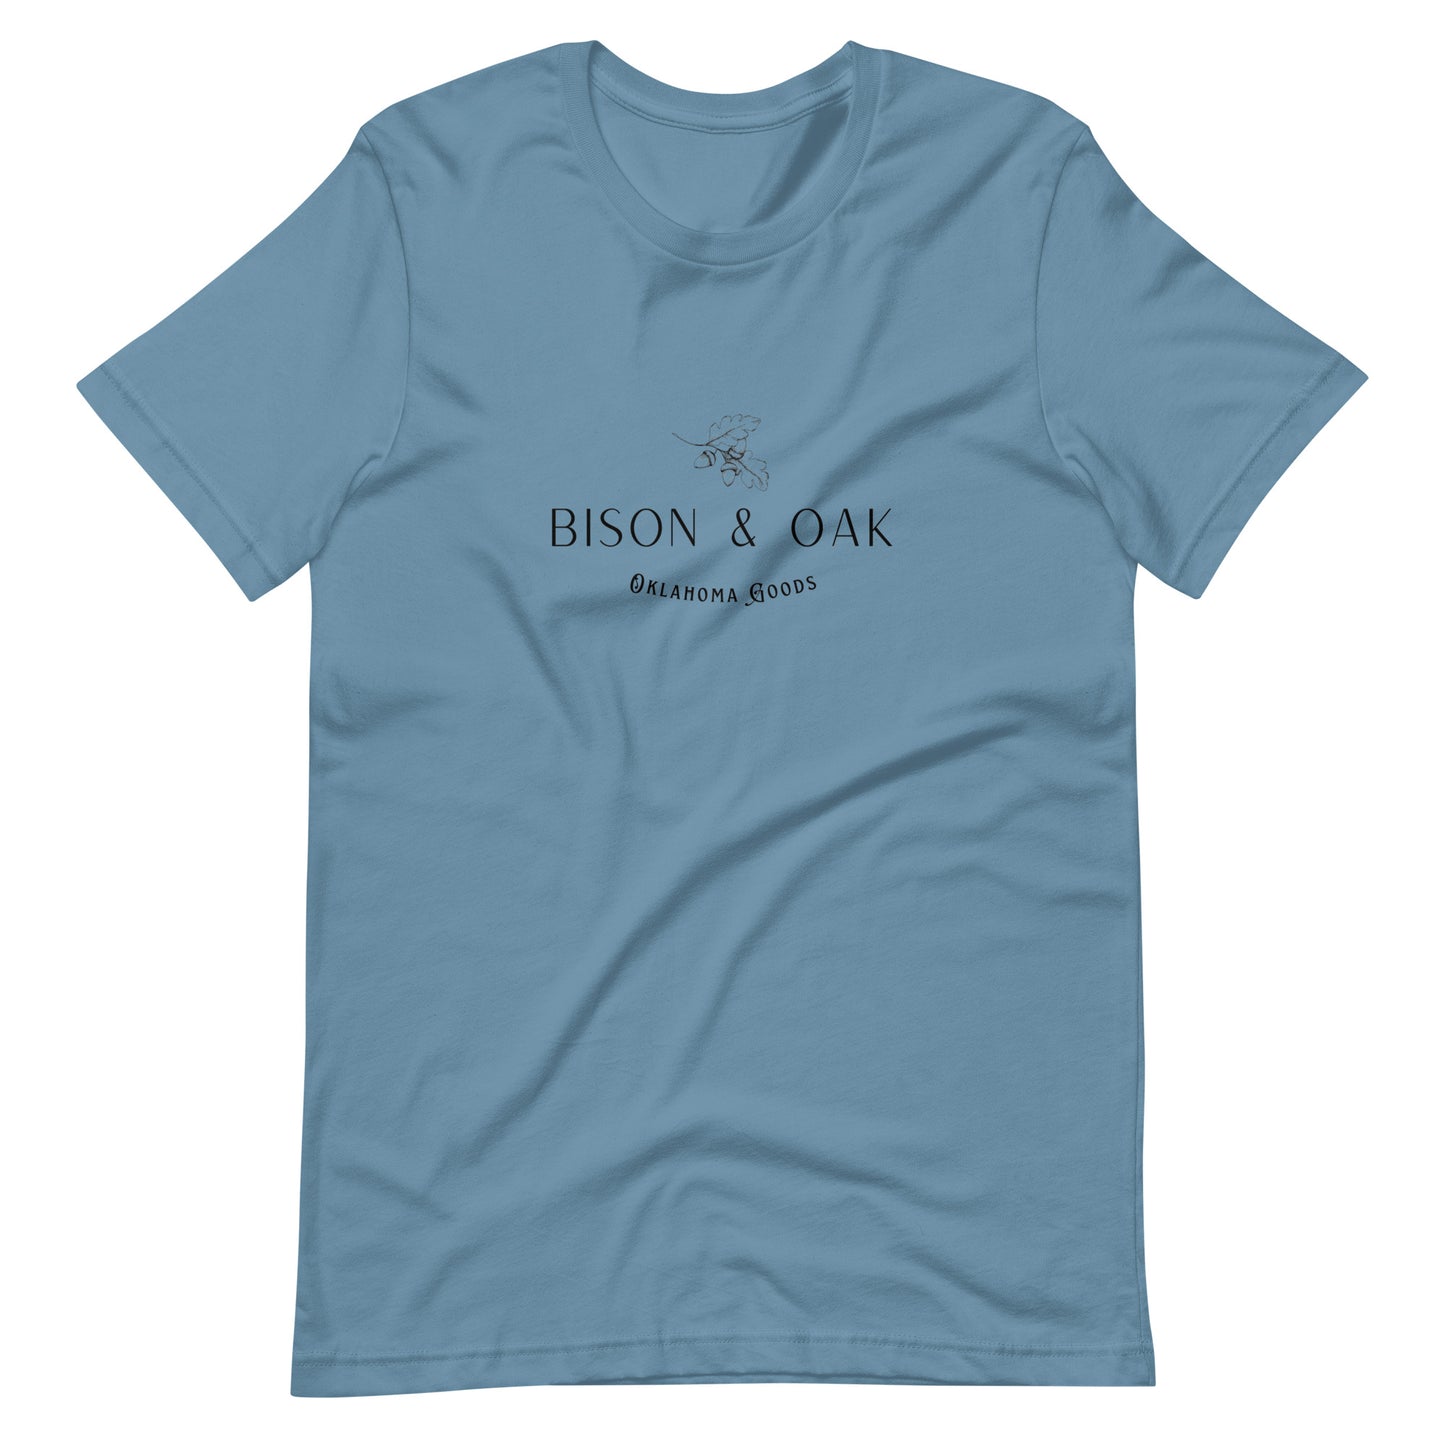 Branded Tee - Bison & Oak Unisex T-Shirt